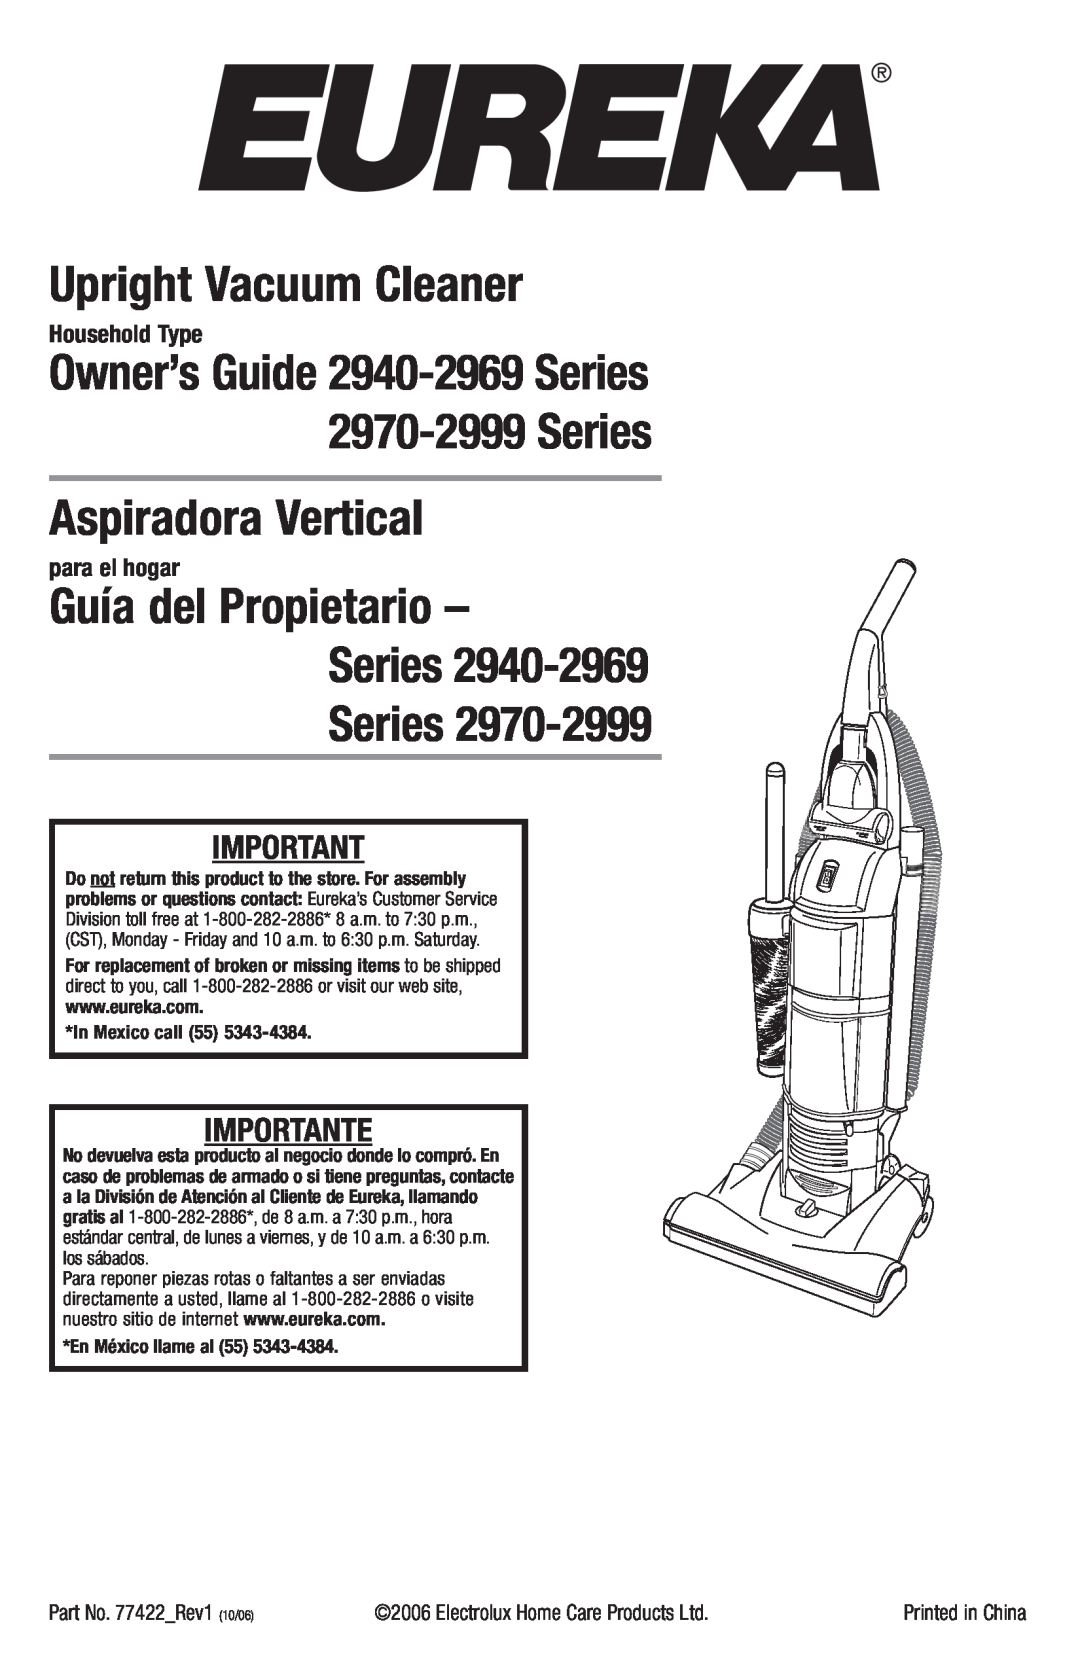 Eureka 2970-2999 Series manual Upright Vacuum Cleaner, Aspiradora Vertical, Guía del Propietario Series Series, Importante 